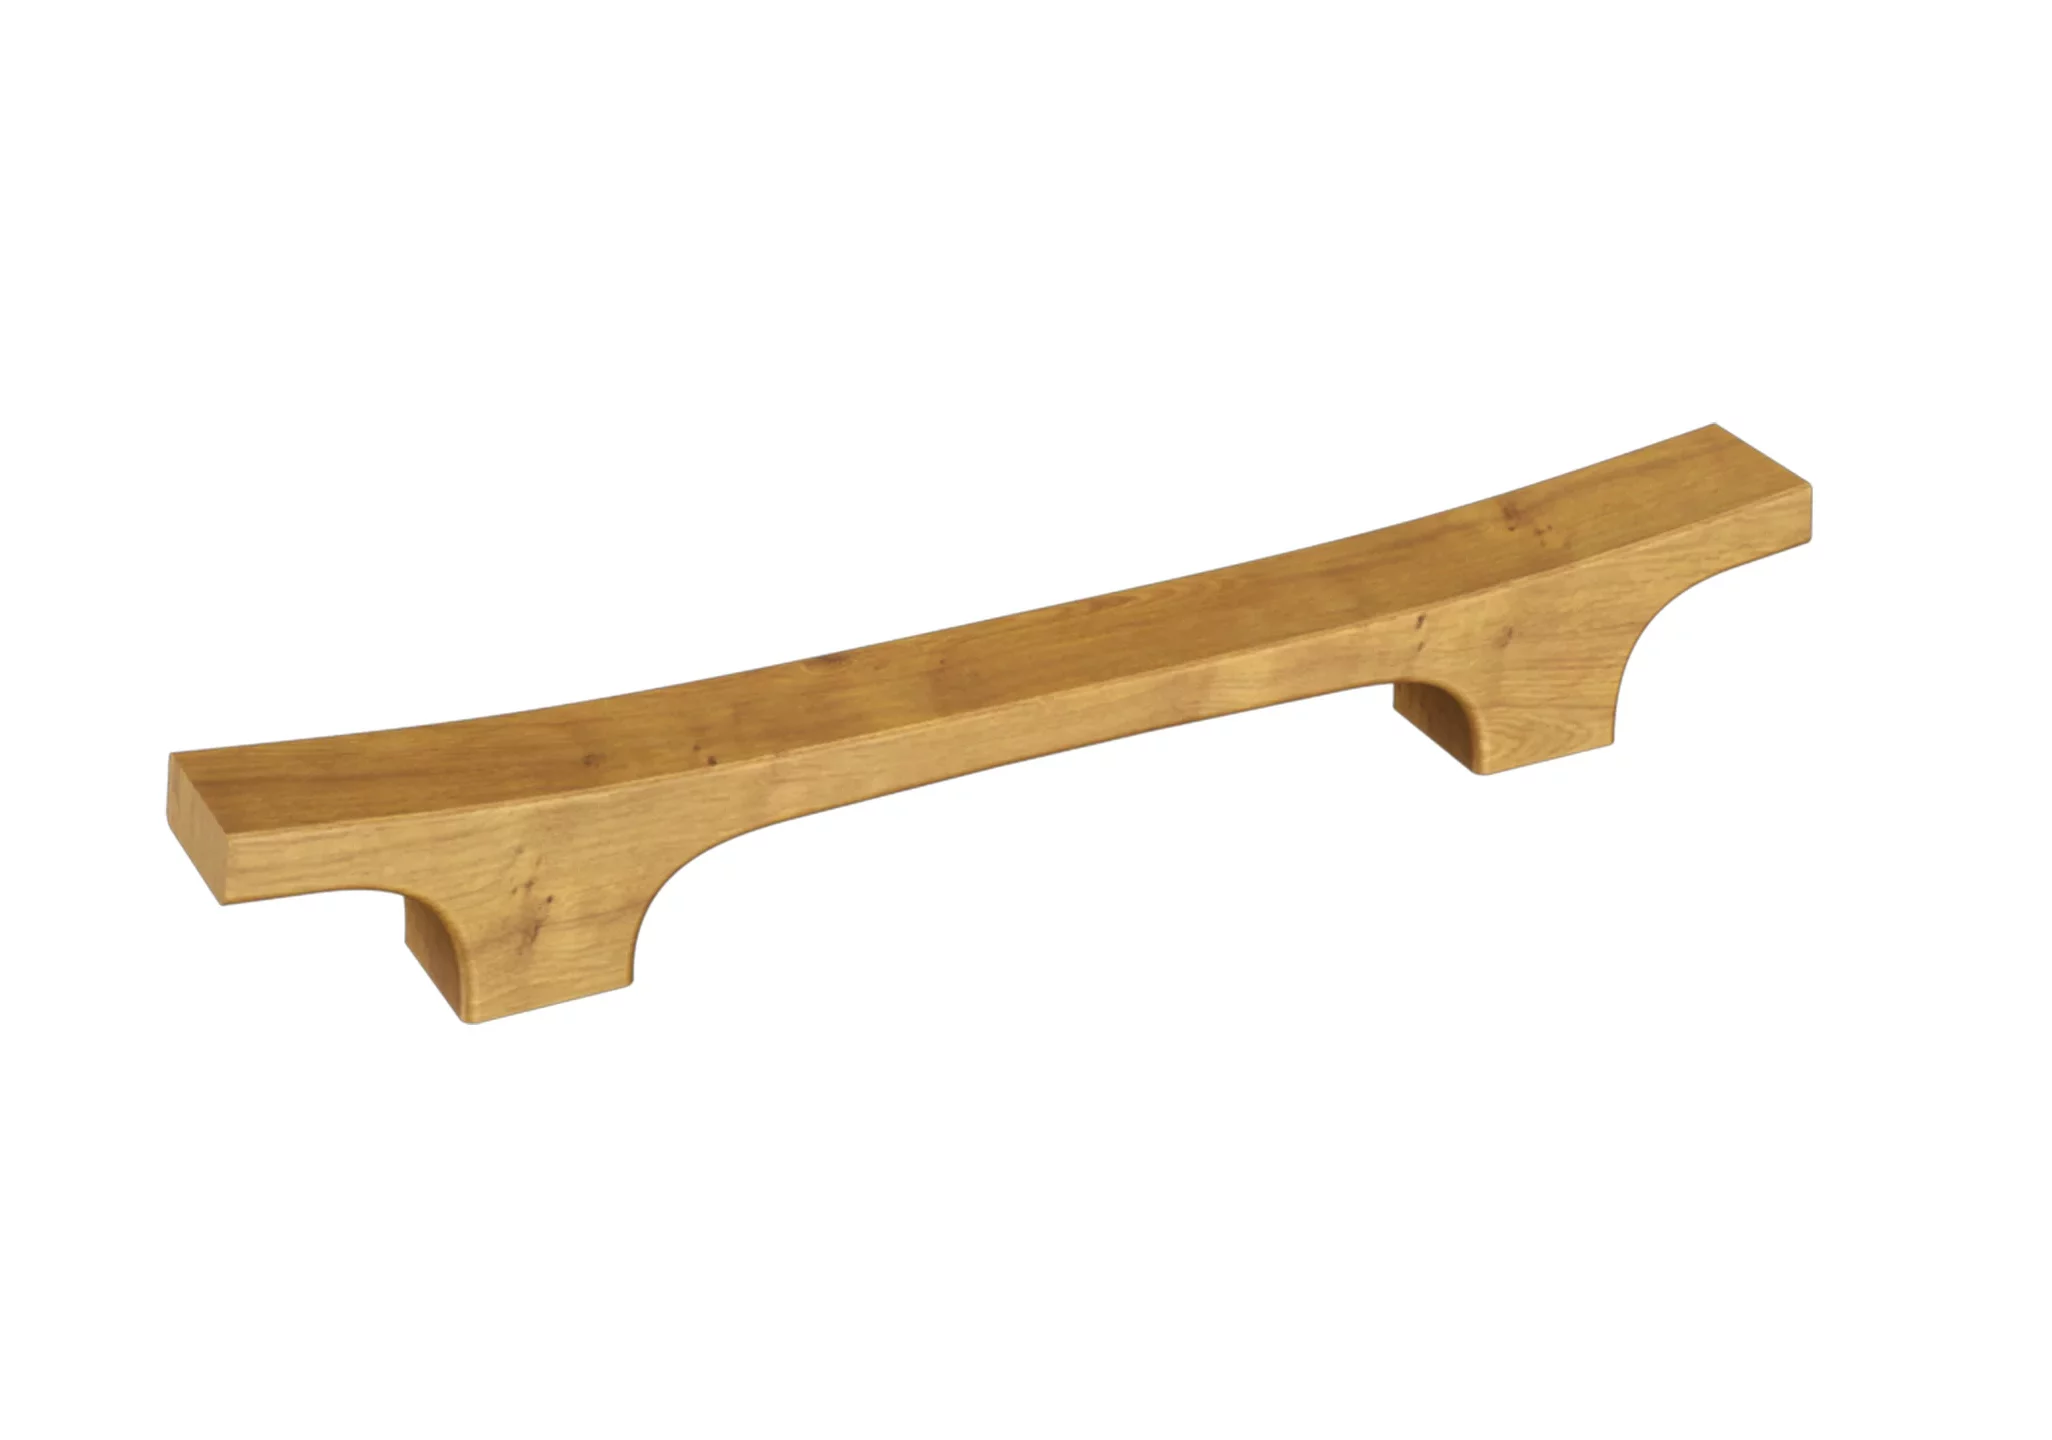 Japanese wooden handles